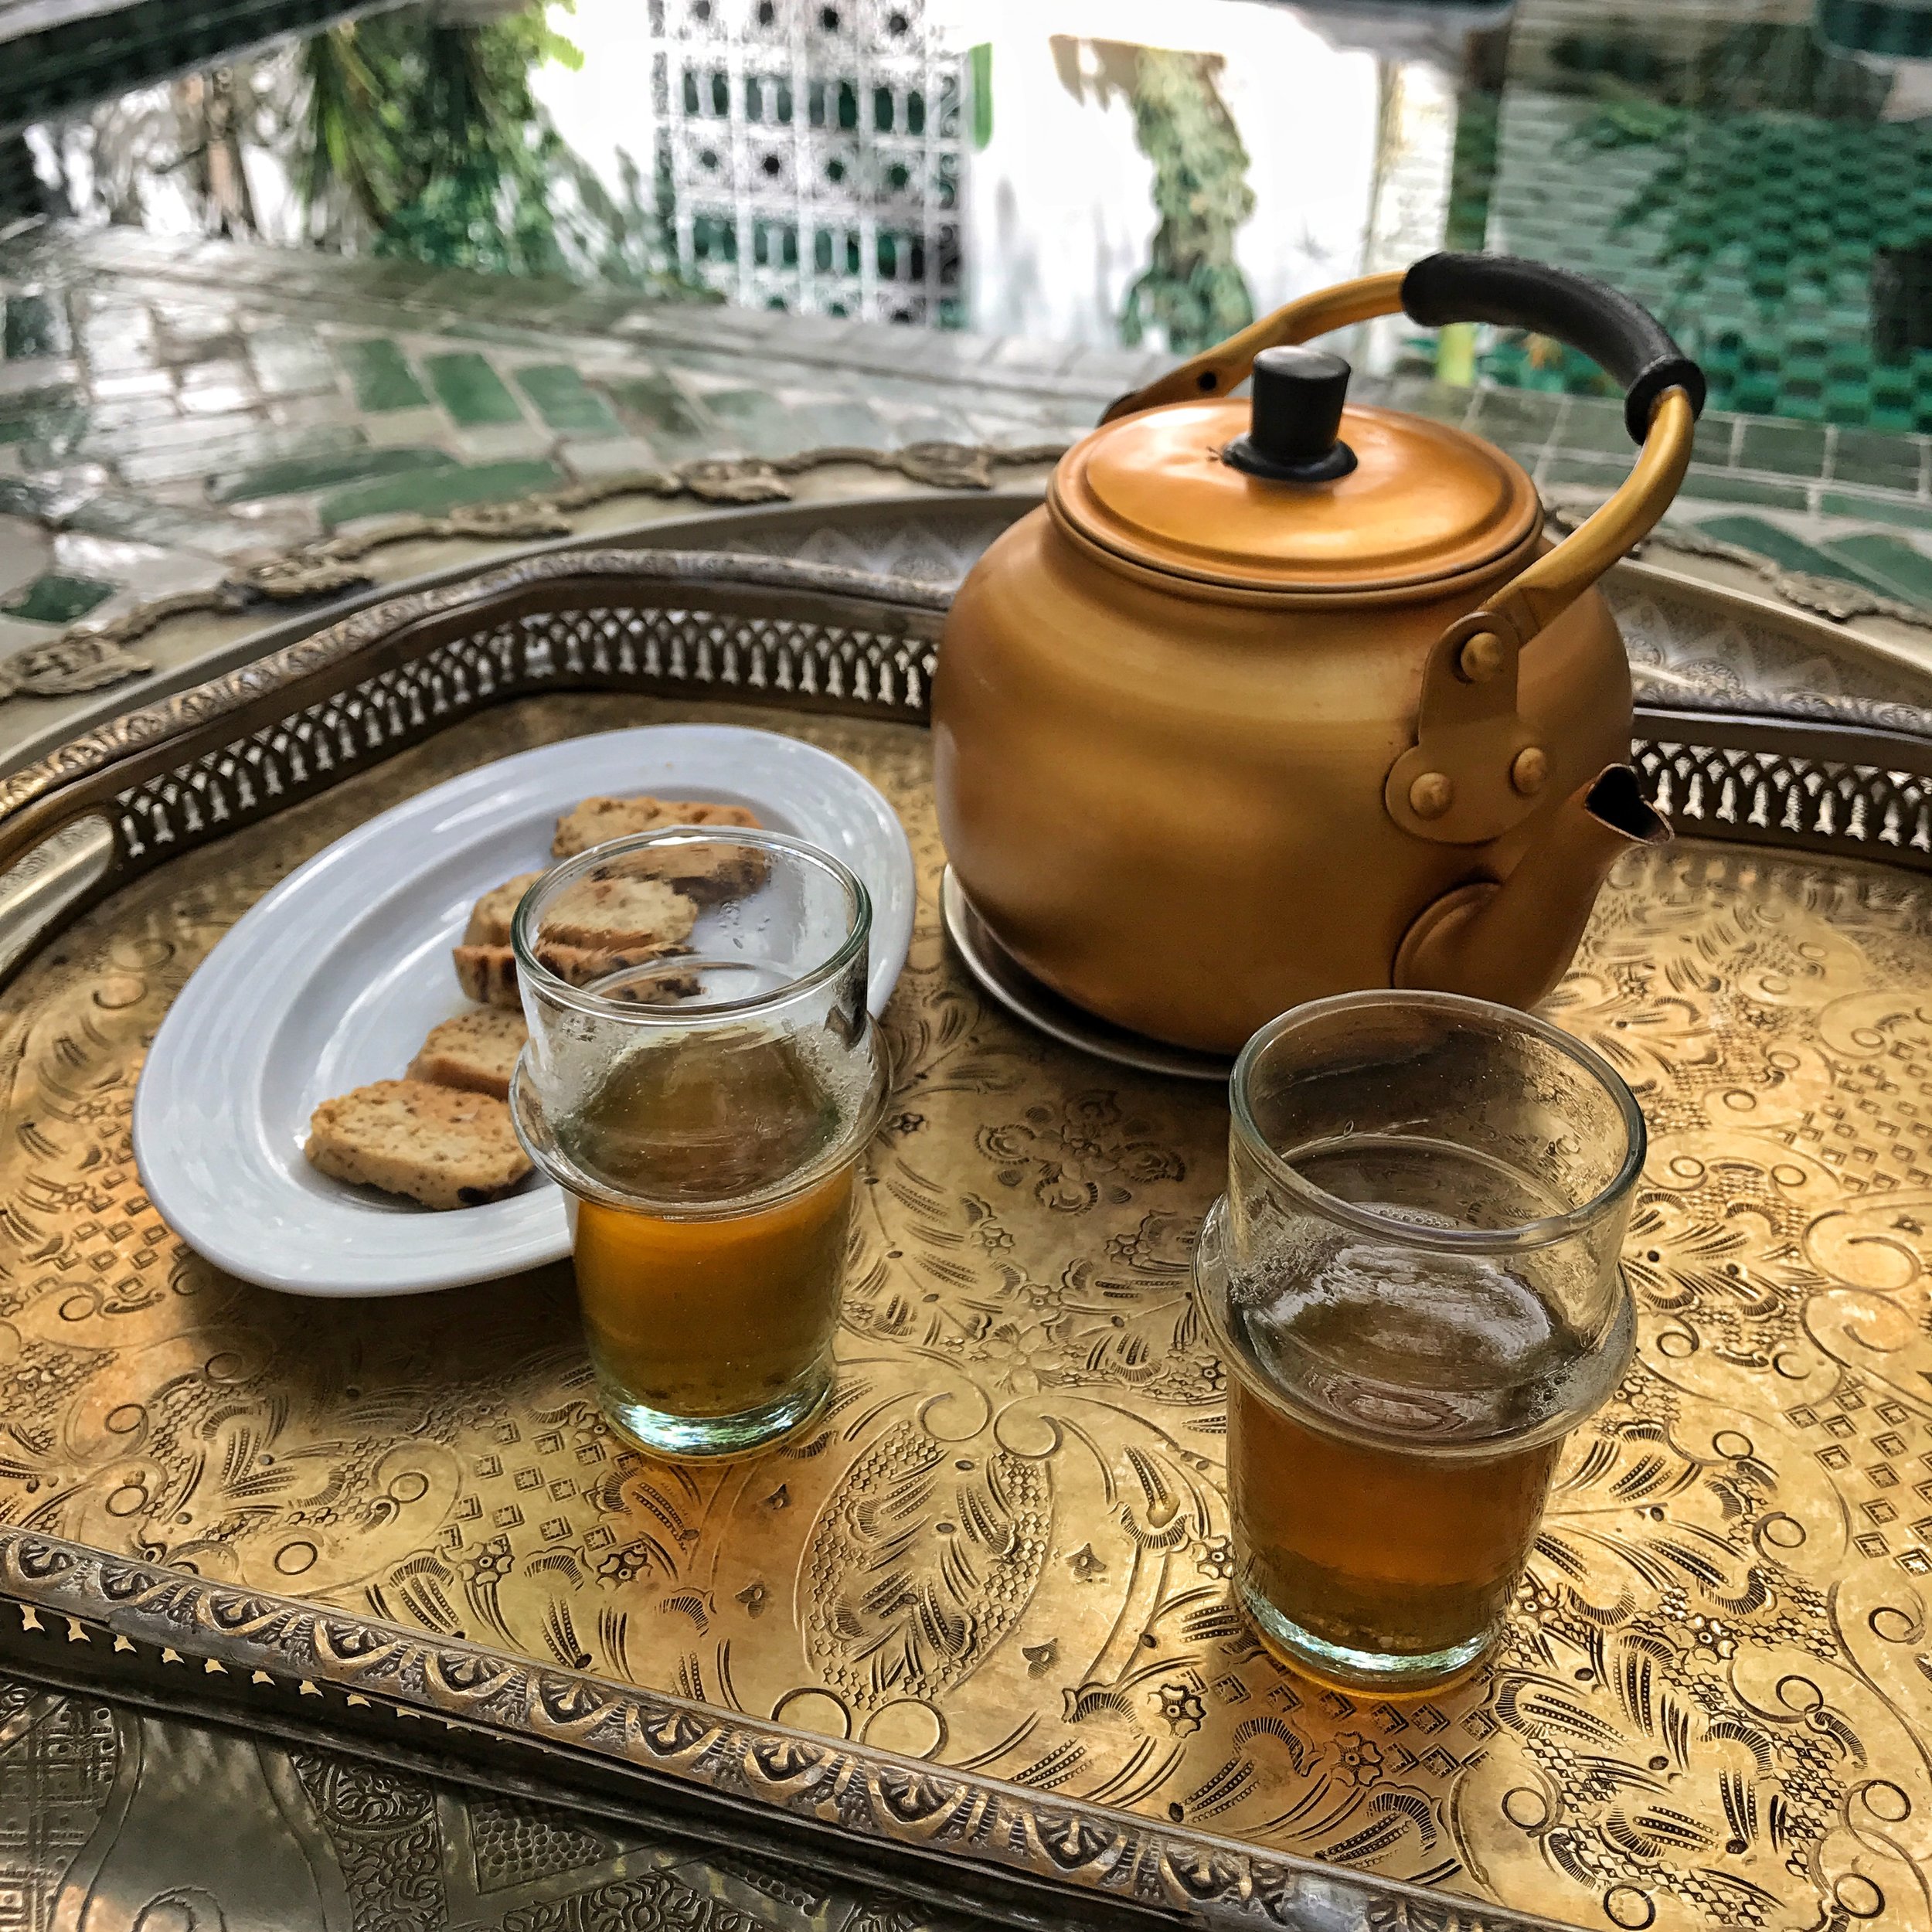 Moroccan tea! mmm